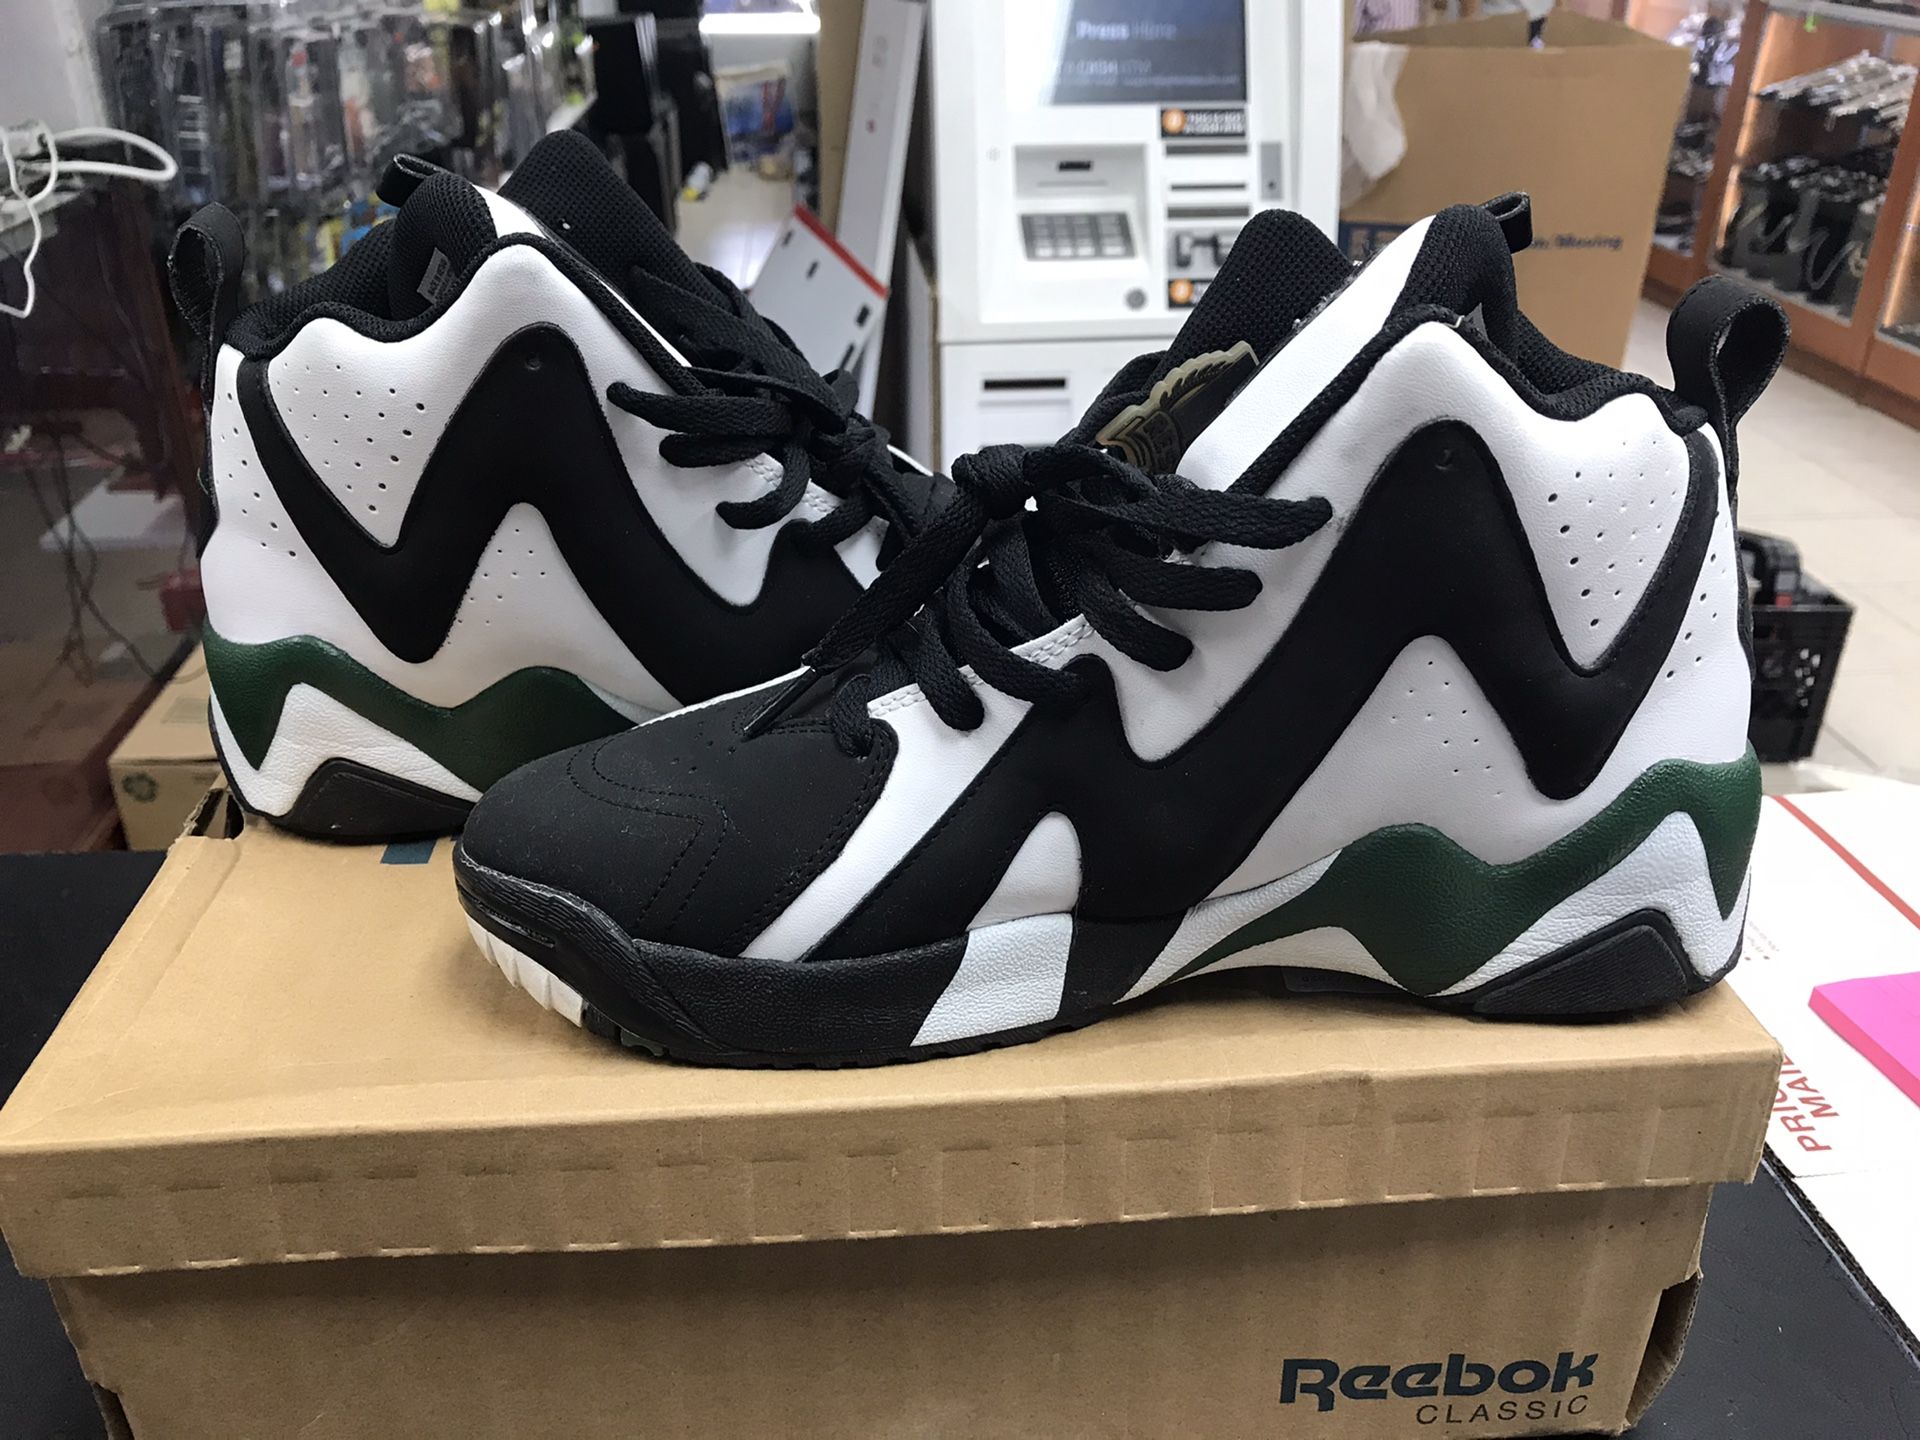 Reebok Kamikaze II Green Shawn Kemp Retro Men’s Sneakers Size 8.5